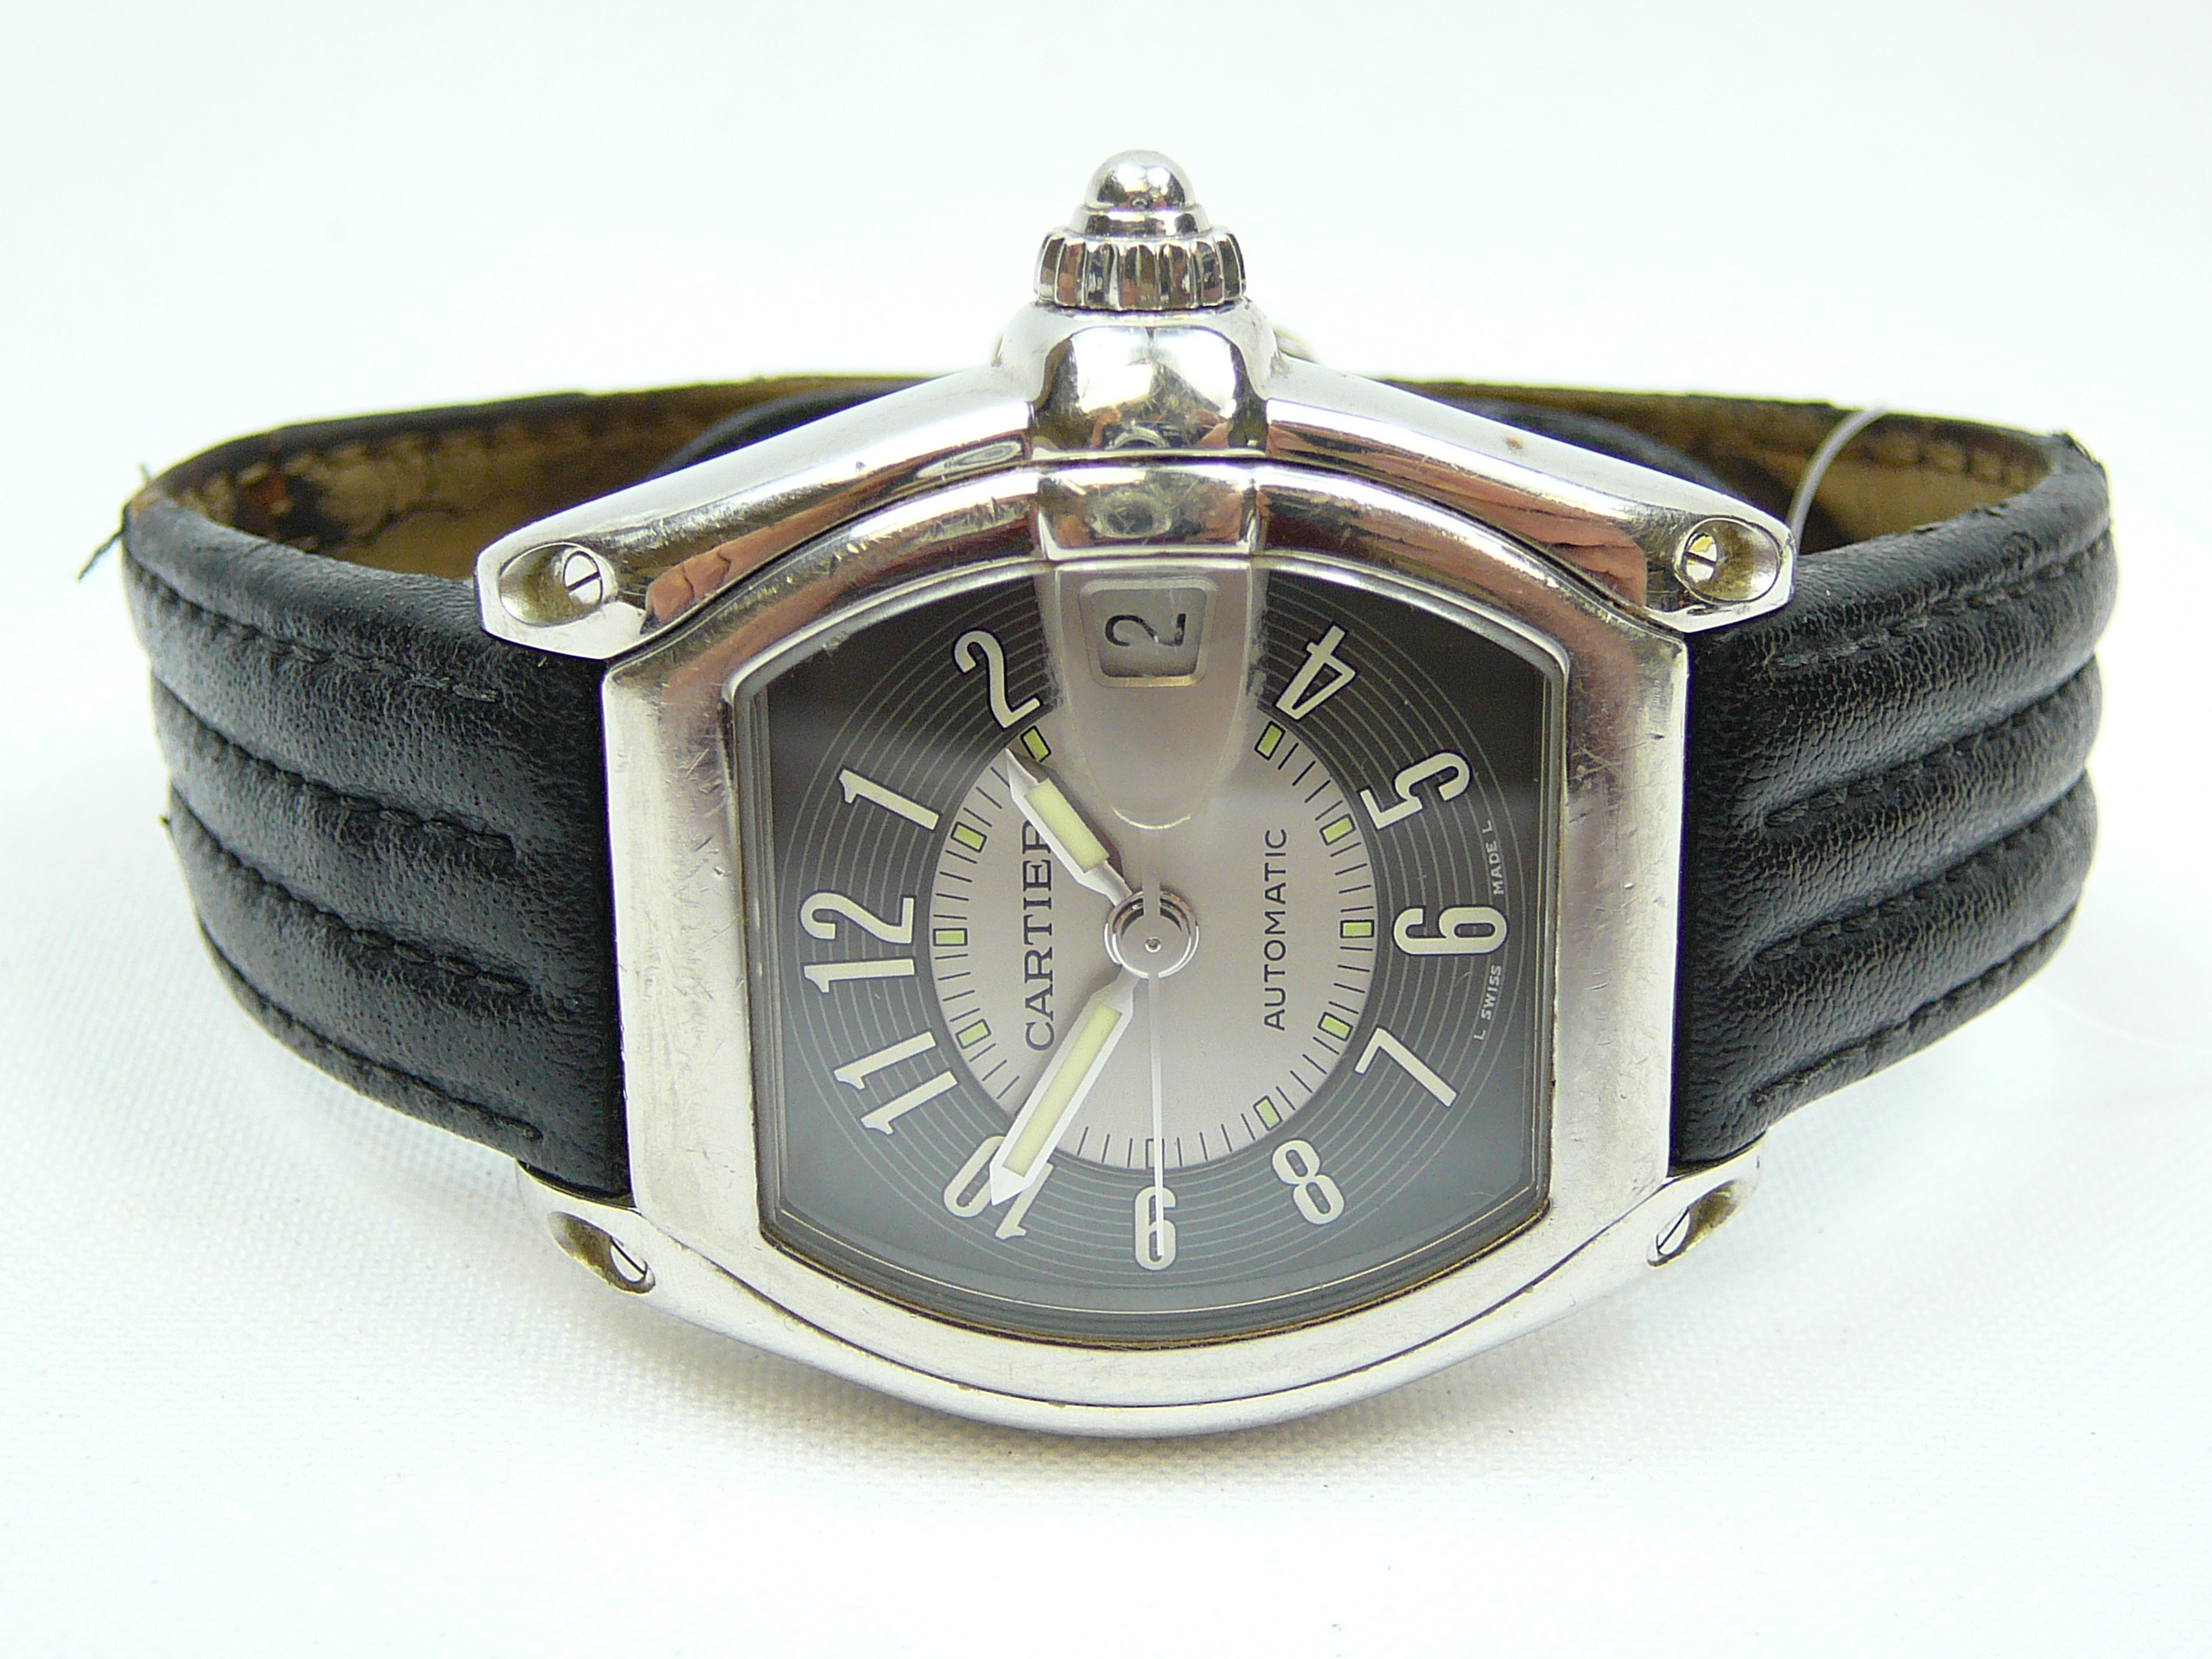 Gents Cartier Wrist Watch - Image 8 of 9